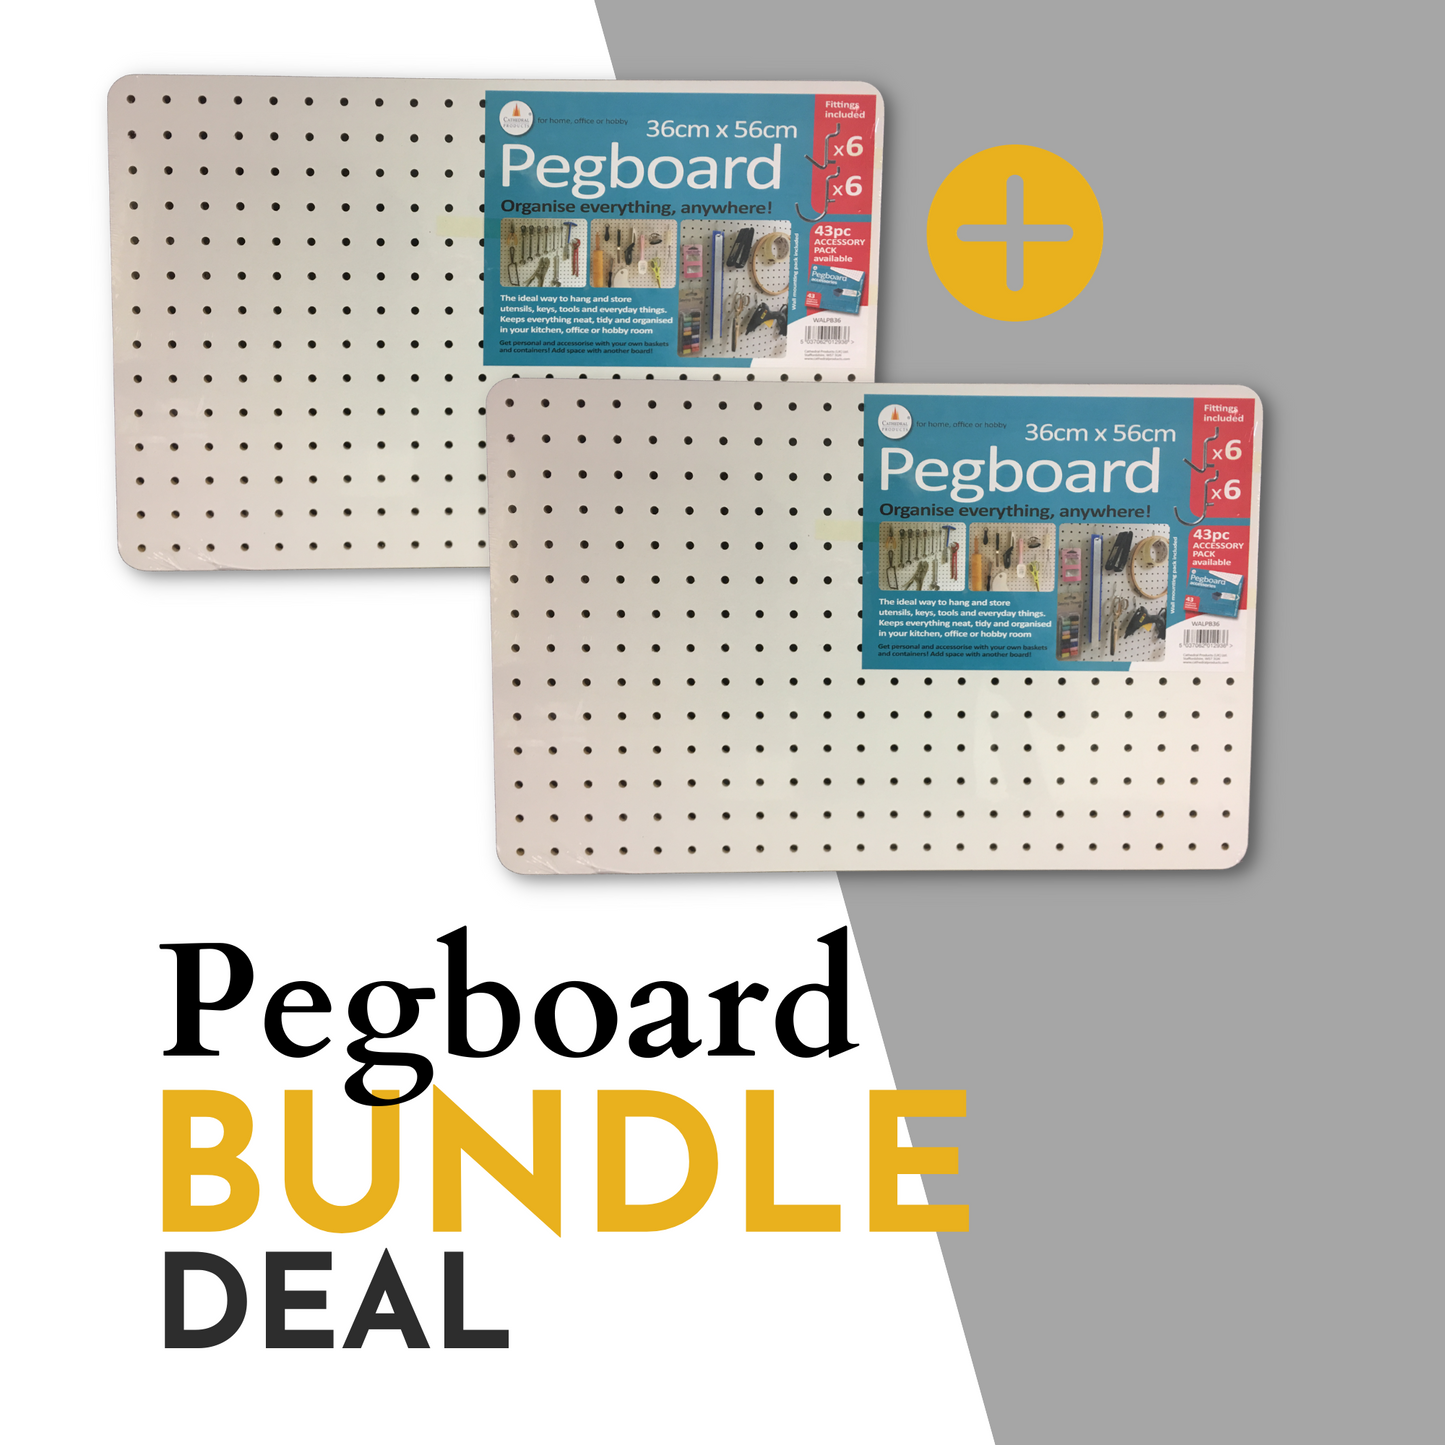 Buy one get one half price - 56x36cm Peg Board